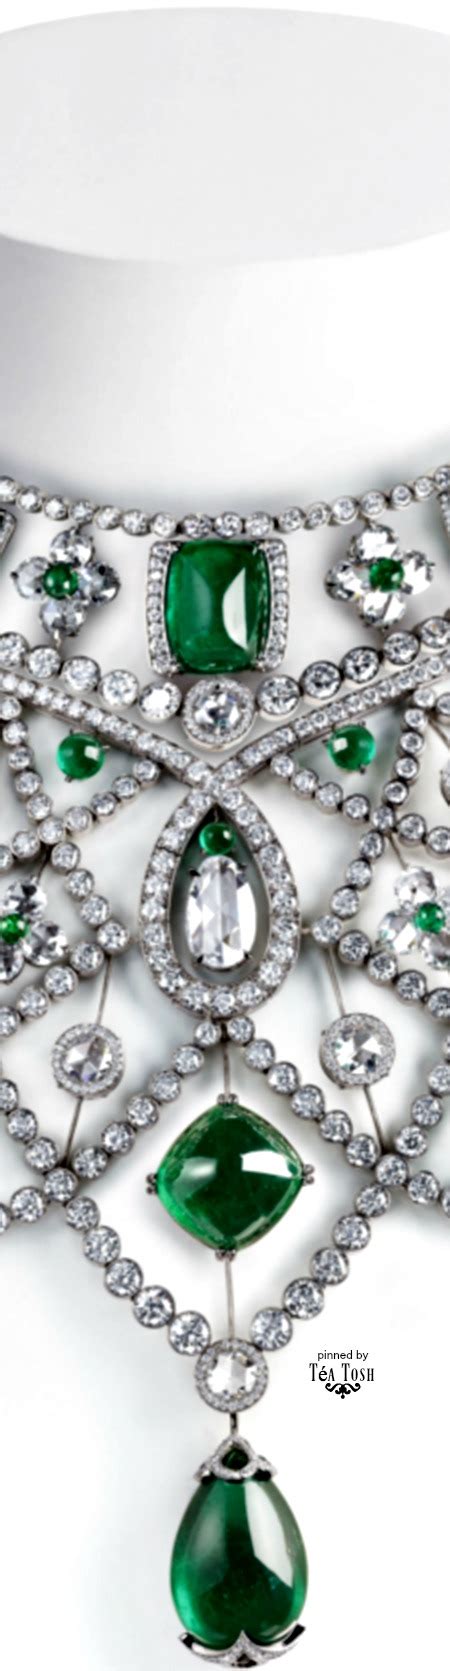 Téa Tosh Romanov Emerald And Diamonds Exquisite Jewelry Shine Bright